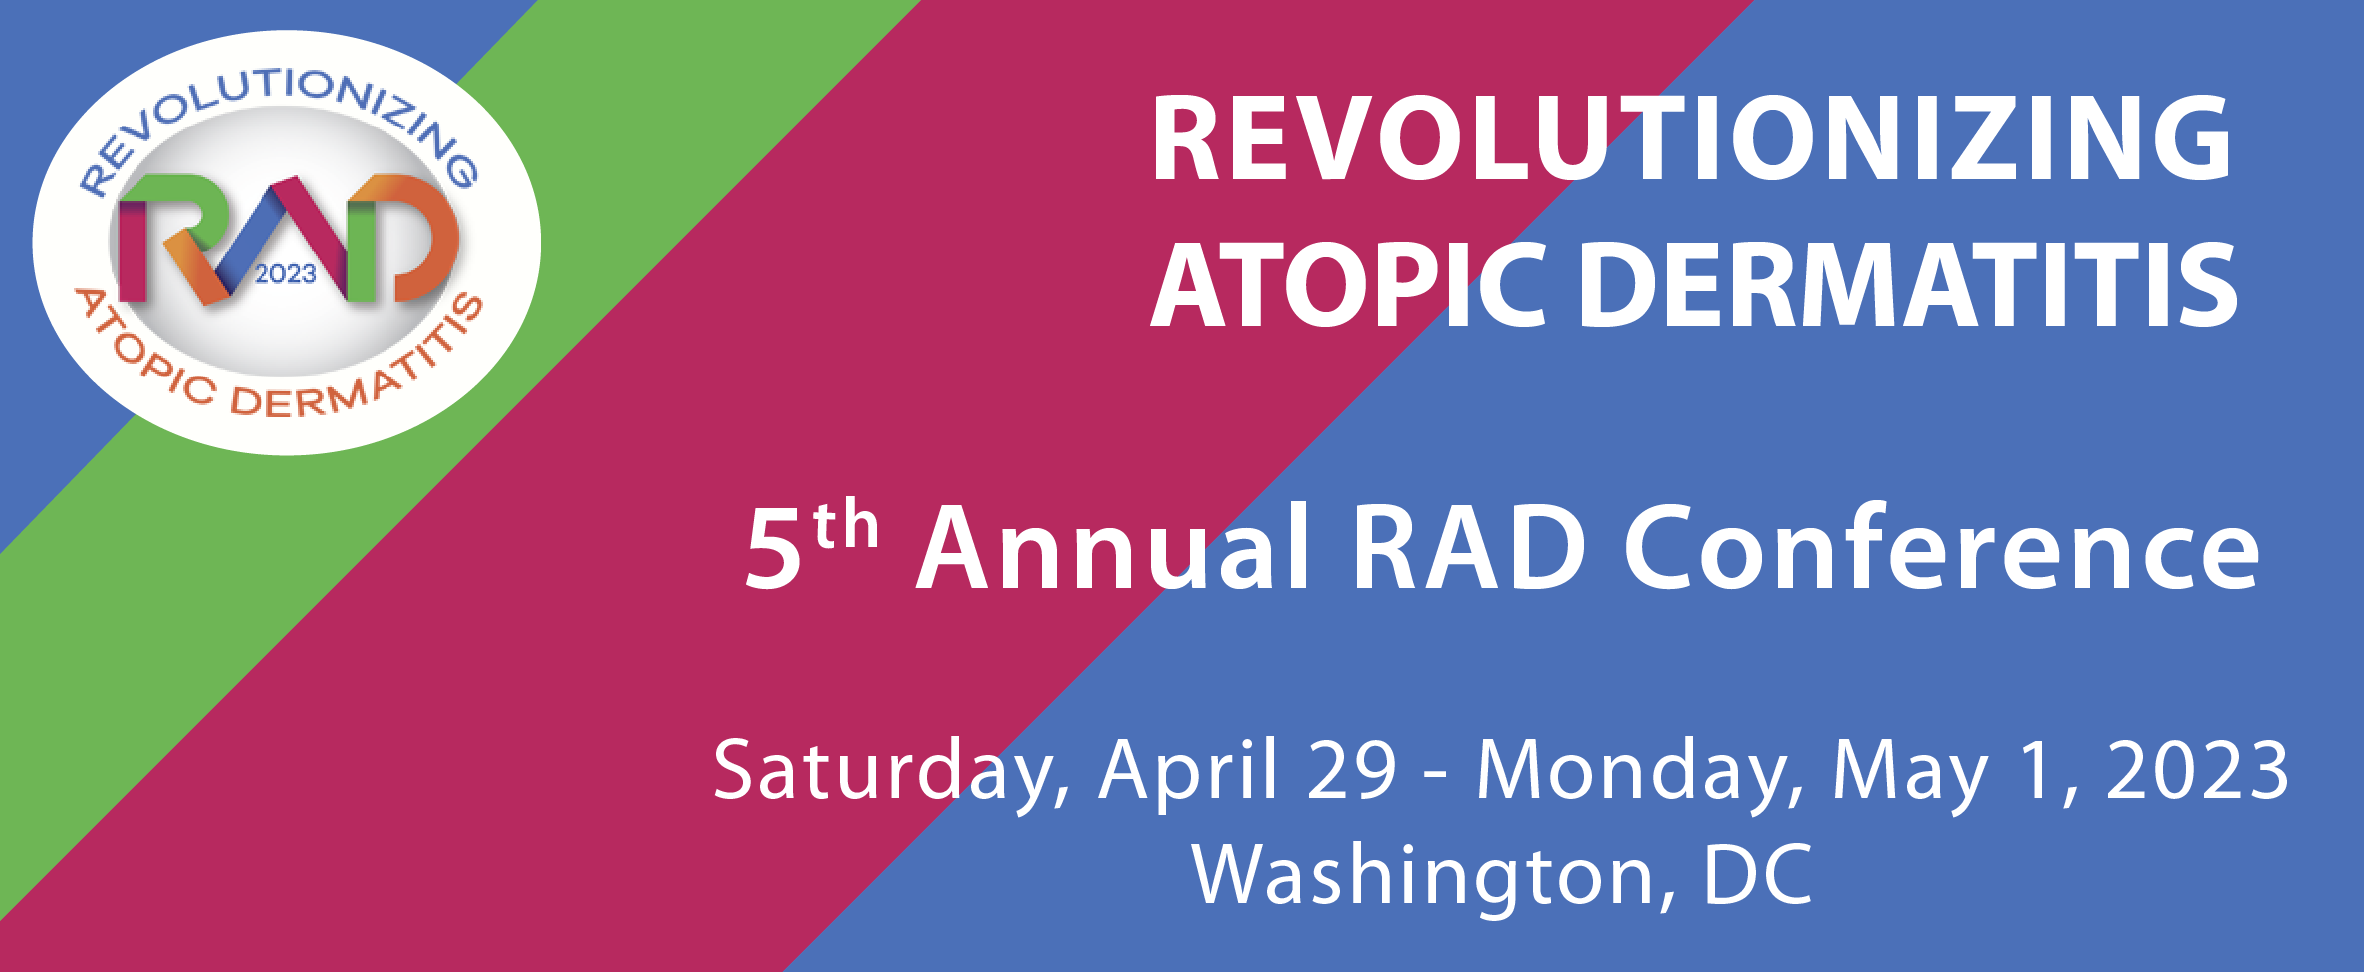 5th Annual Revolutionizing Atopic Dermatitis Conference - RAD 2023